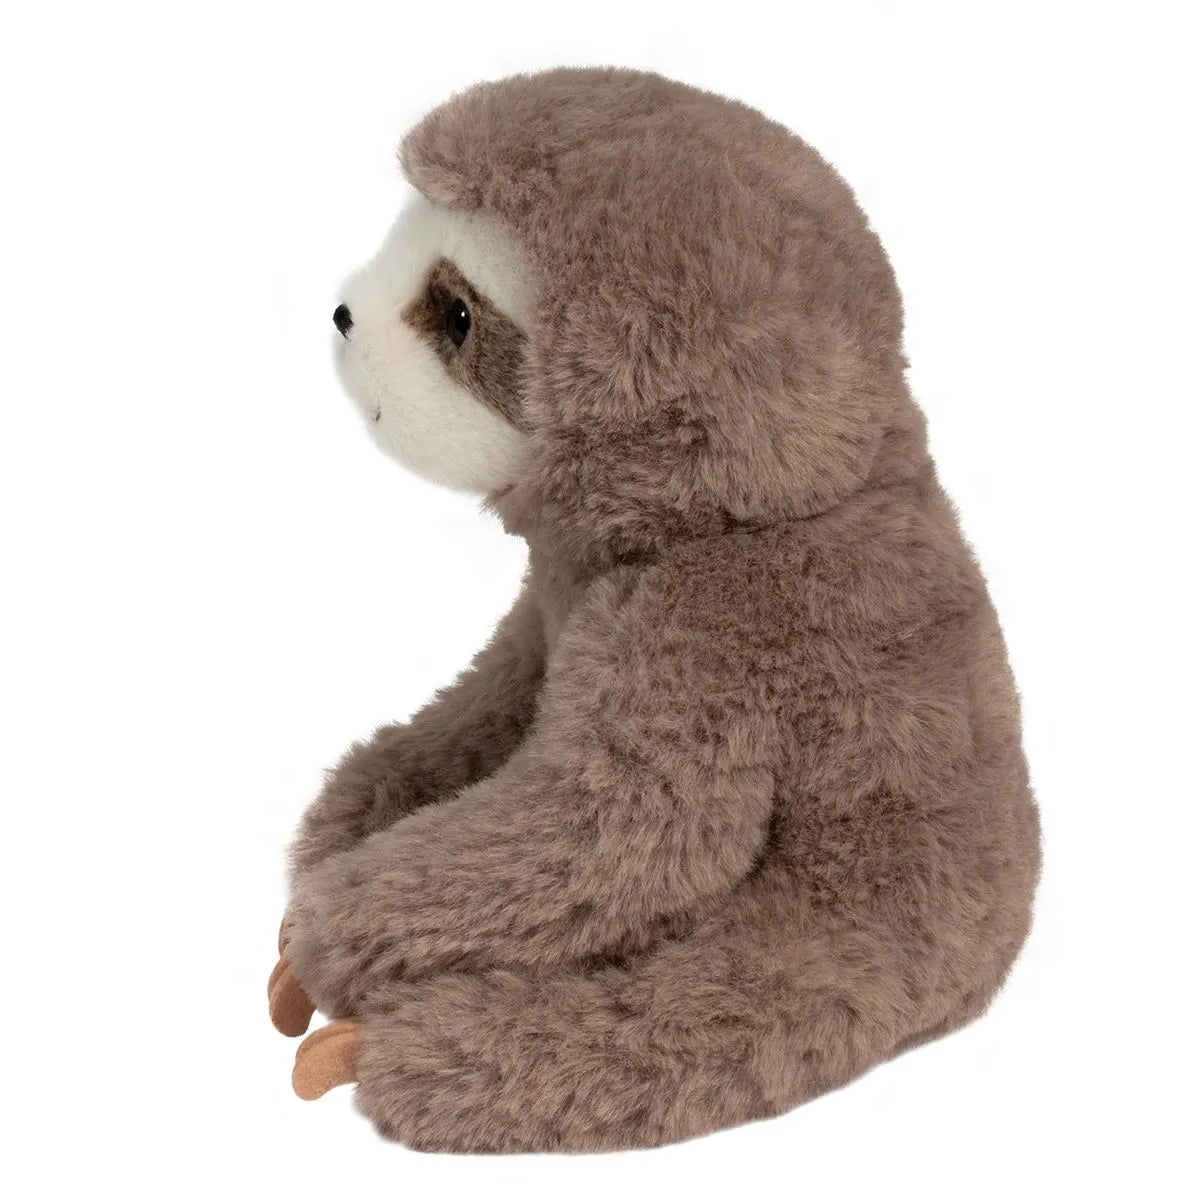 Stuffed Animal - Lizzie Sloth Mini